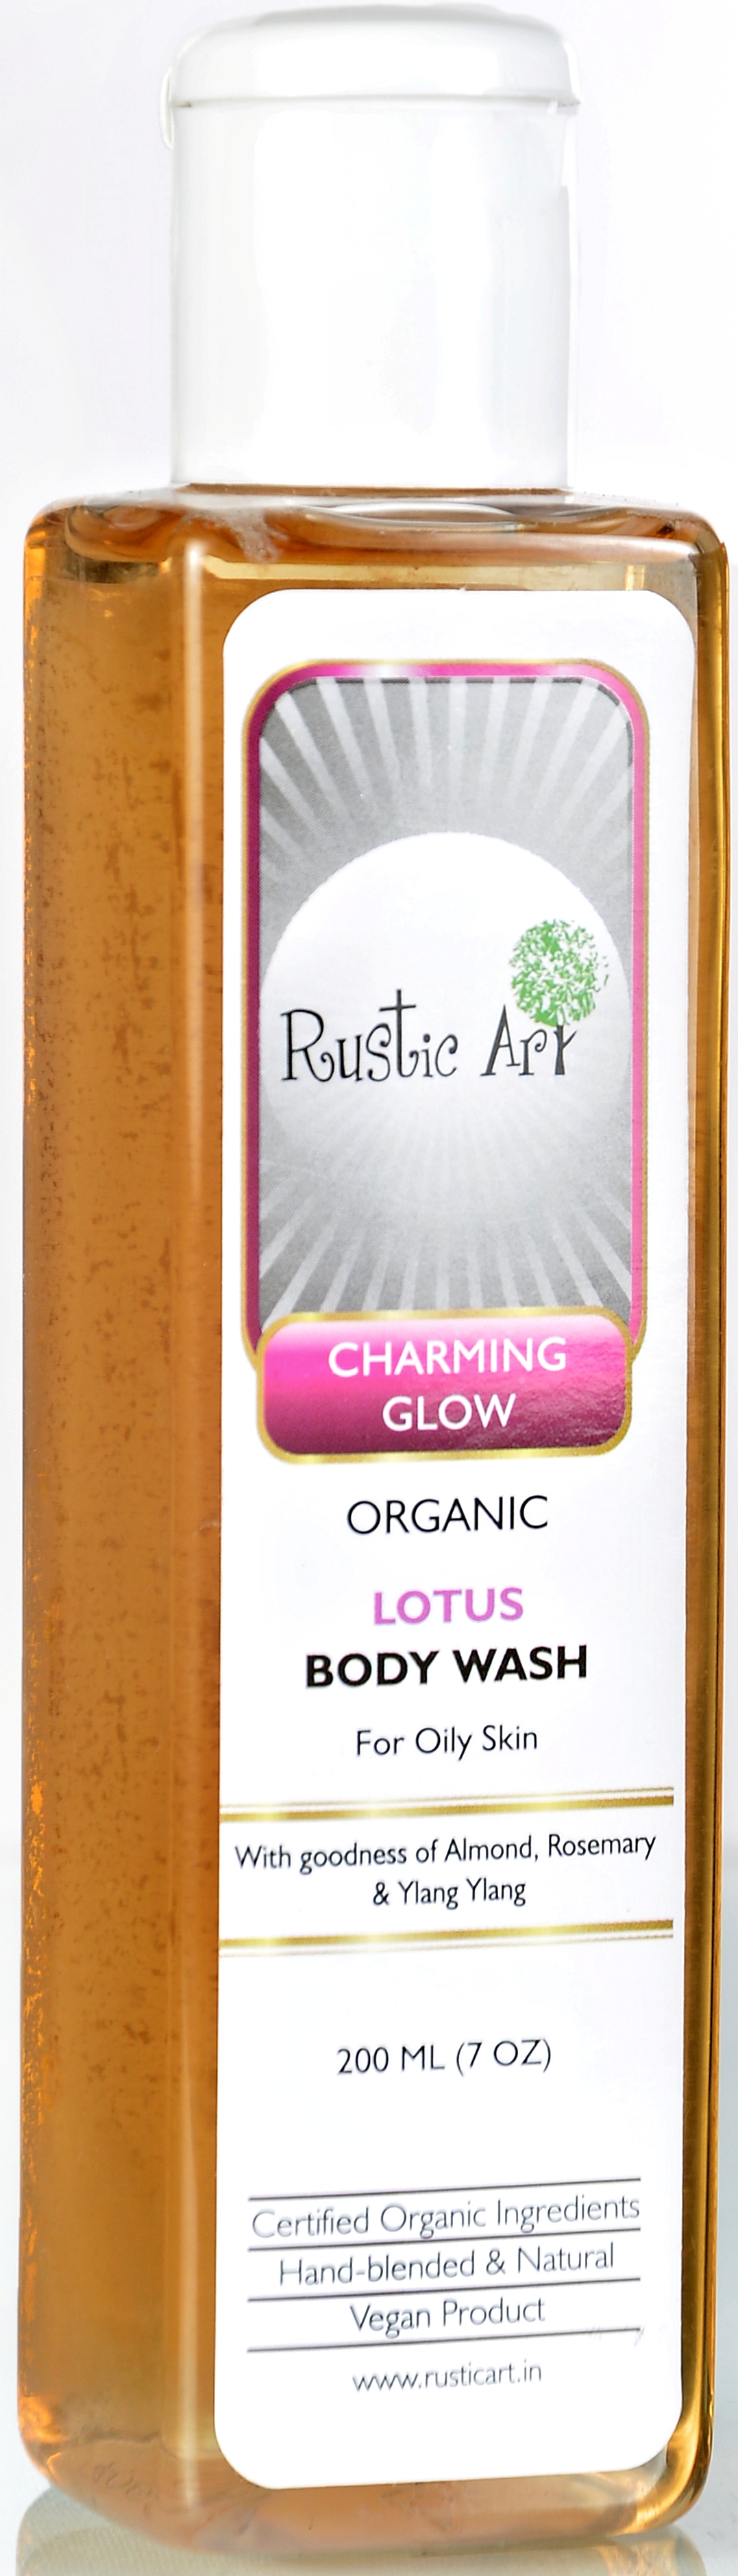 Buy Rustic Art Organic Lotus Body Wash at Best Price Online